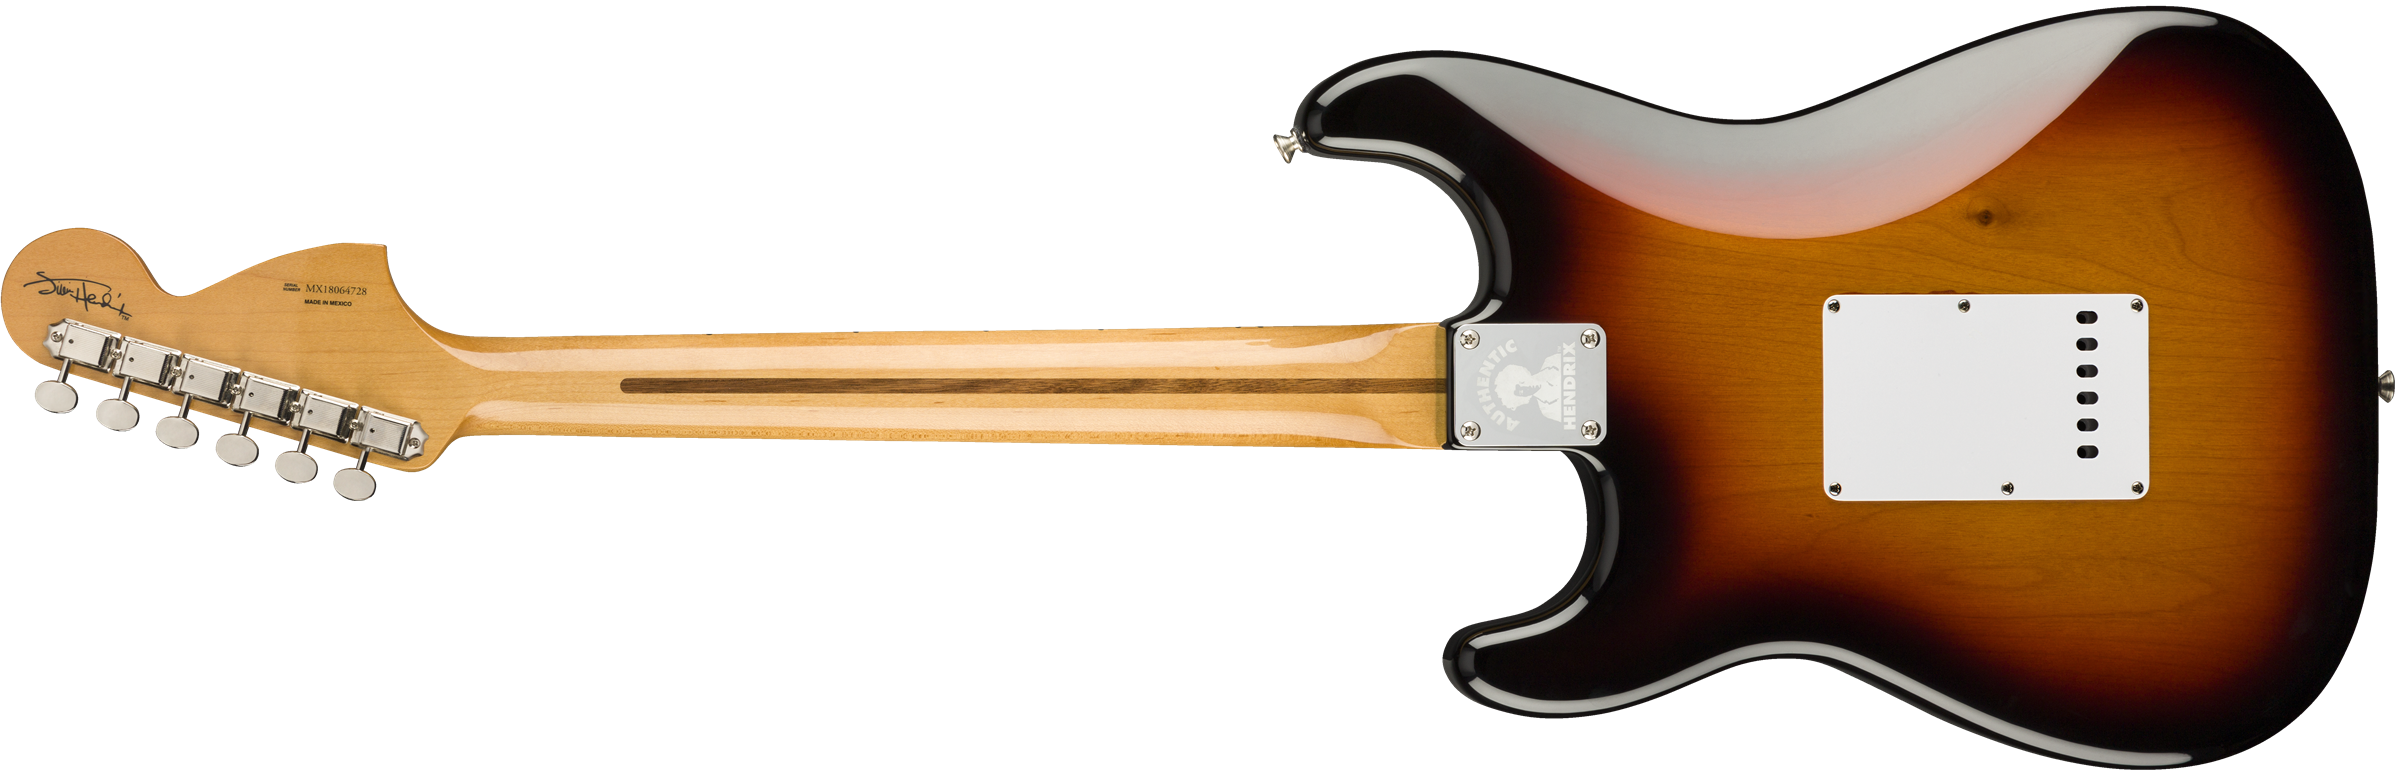 Fender Jimi Hendrix Strat Signature 2018 Mn - 3-color Sunburst - Guitarra eléctrica con forma de str. - Variation 1